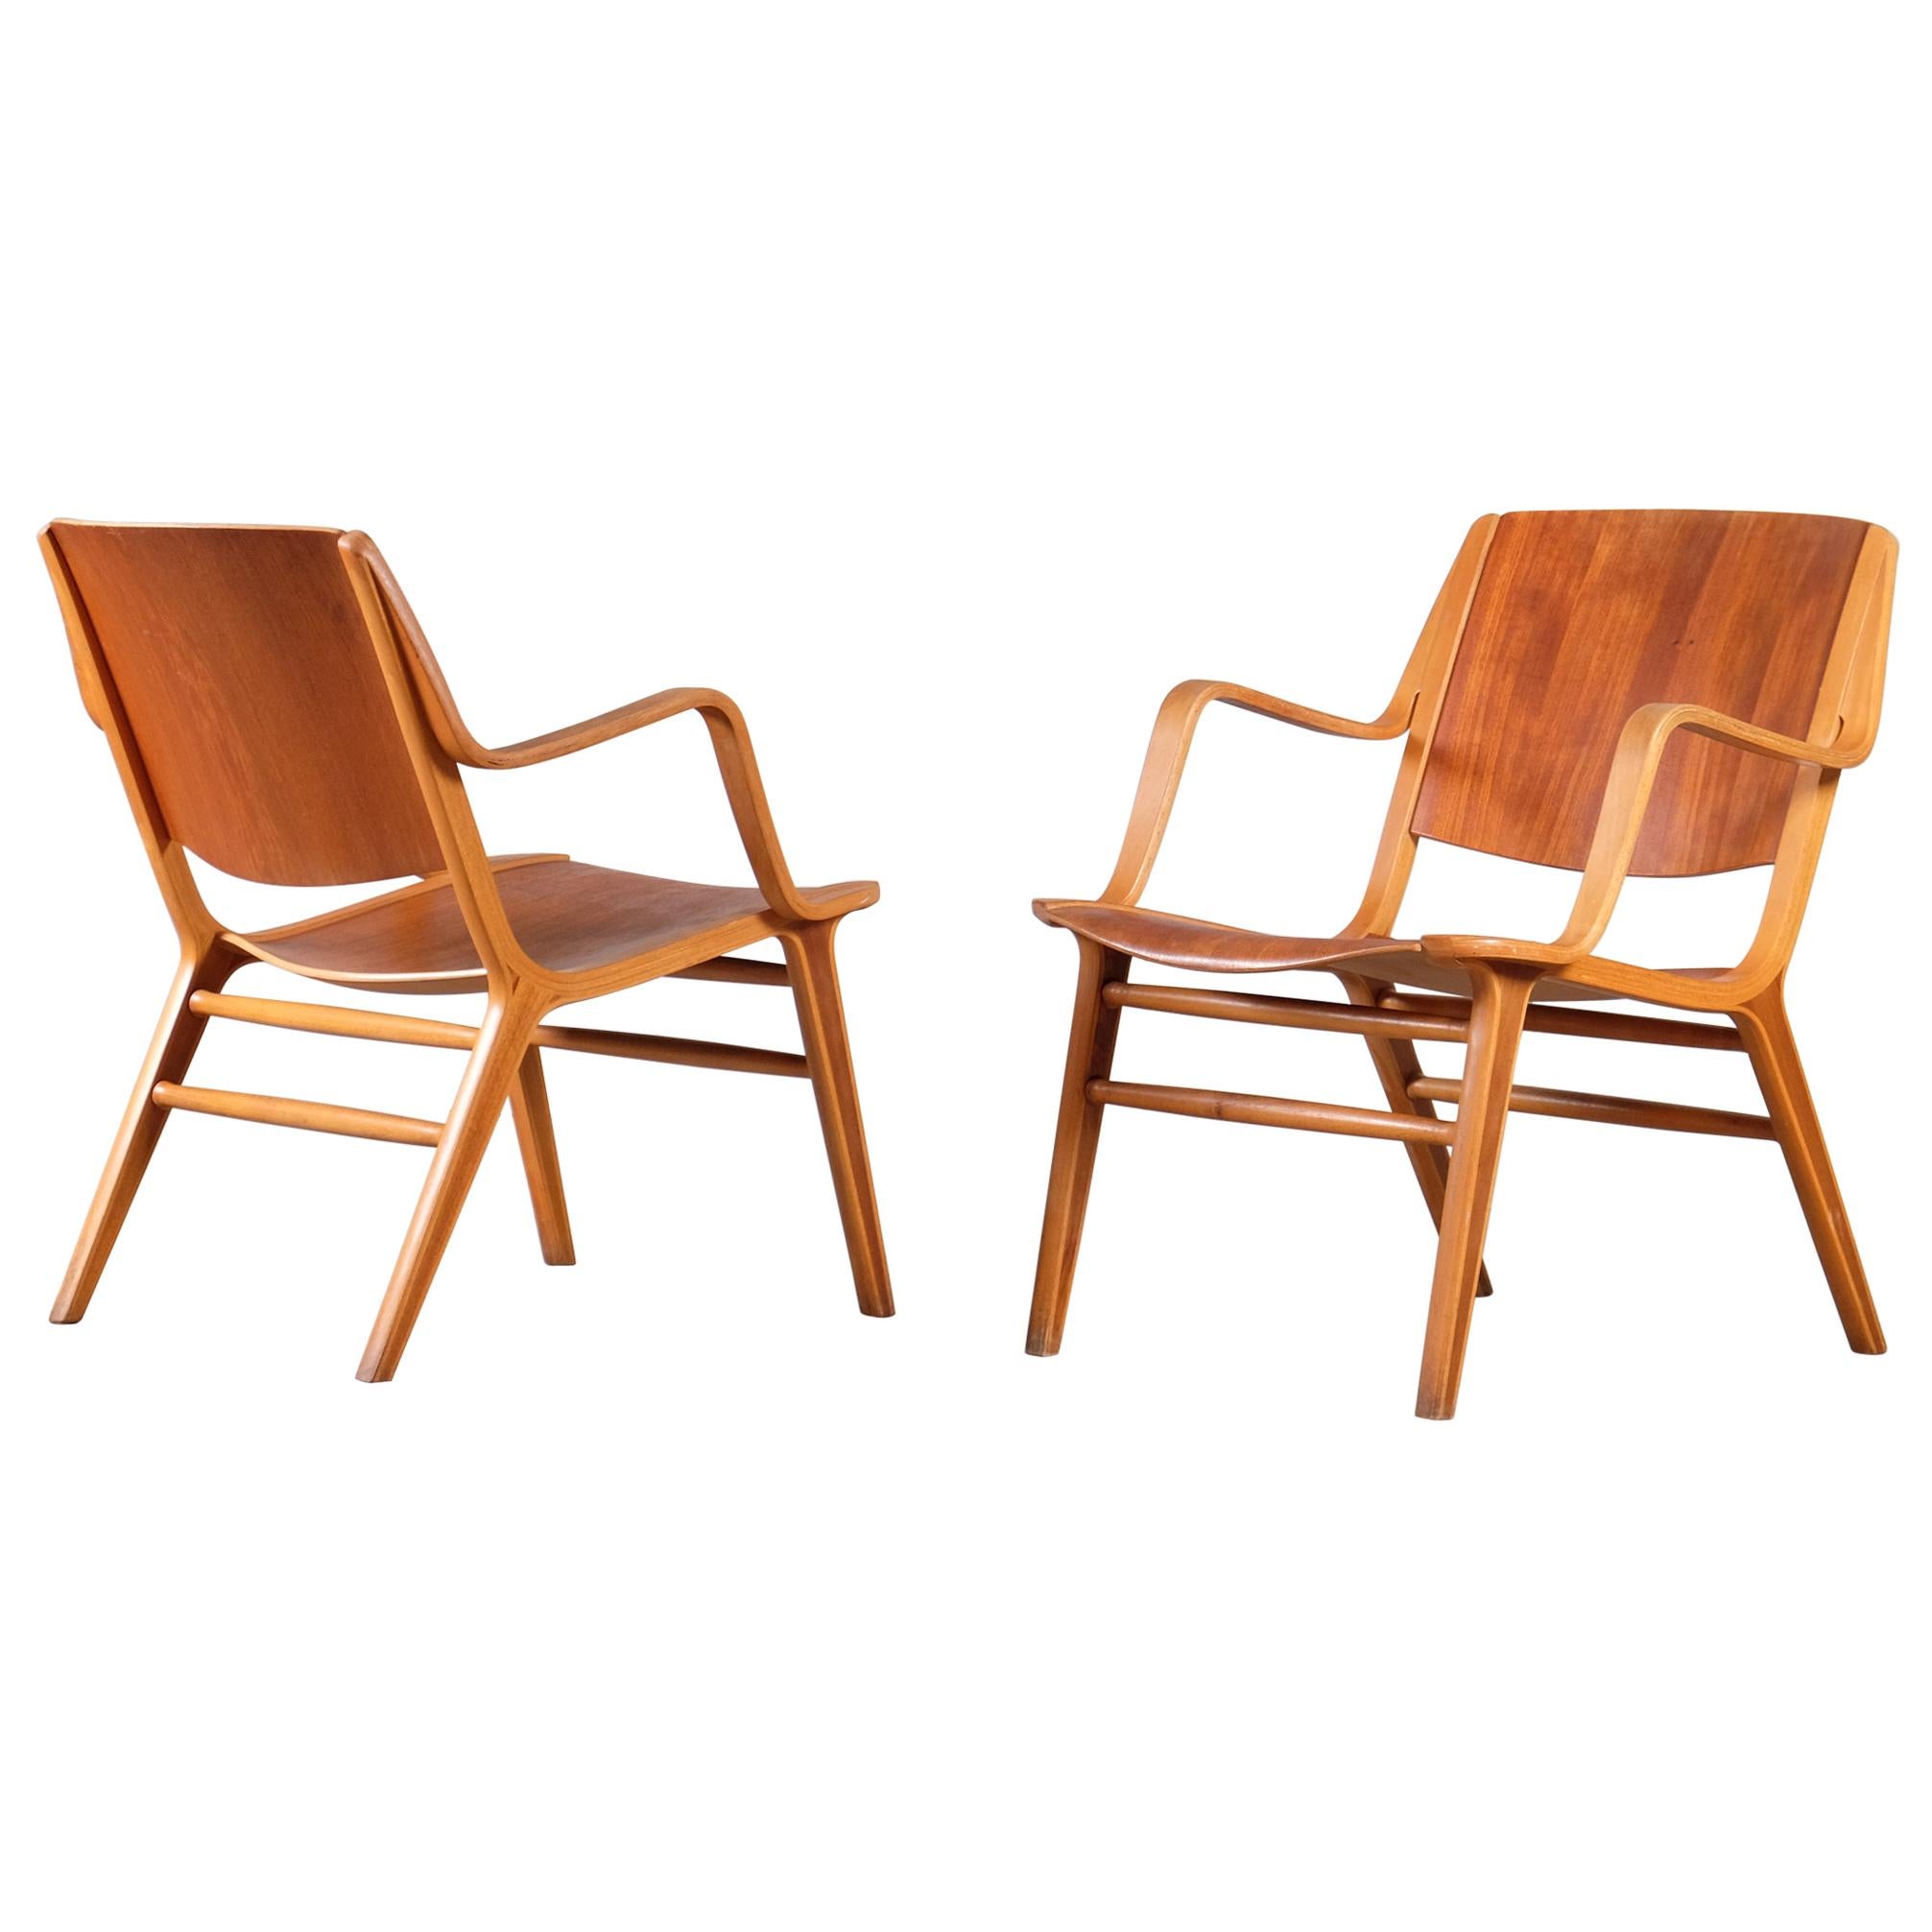 Pair of "Ax-chair" by Peter Hvidt & Orla Mølgaard Nielsen, Denmark, 1950s